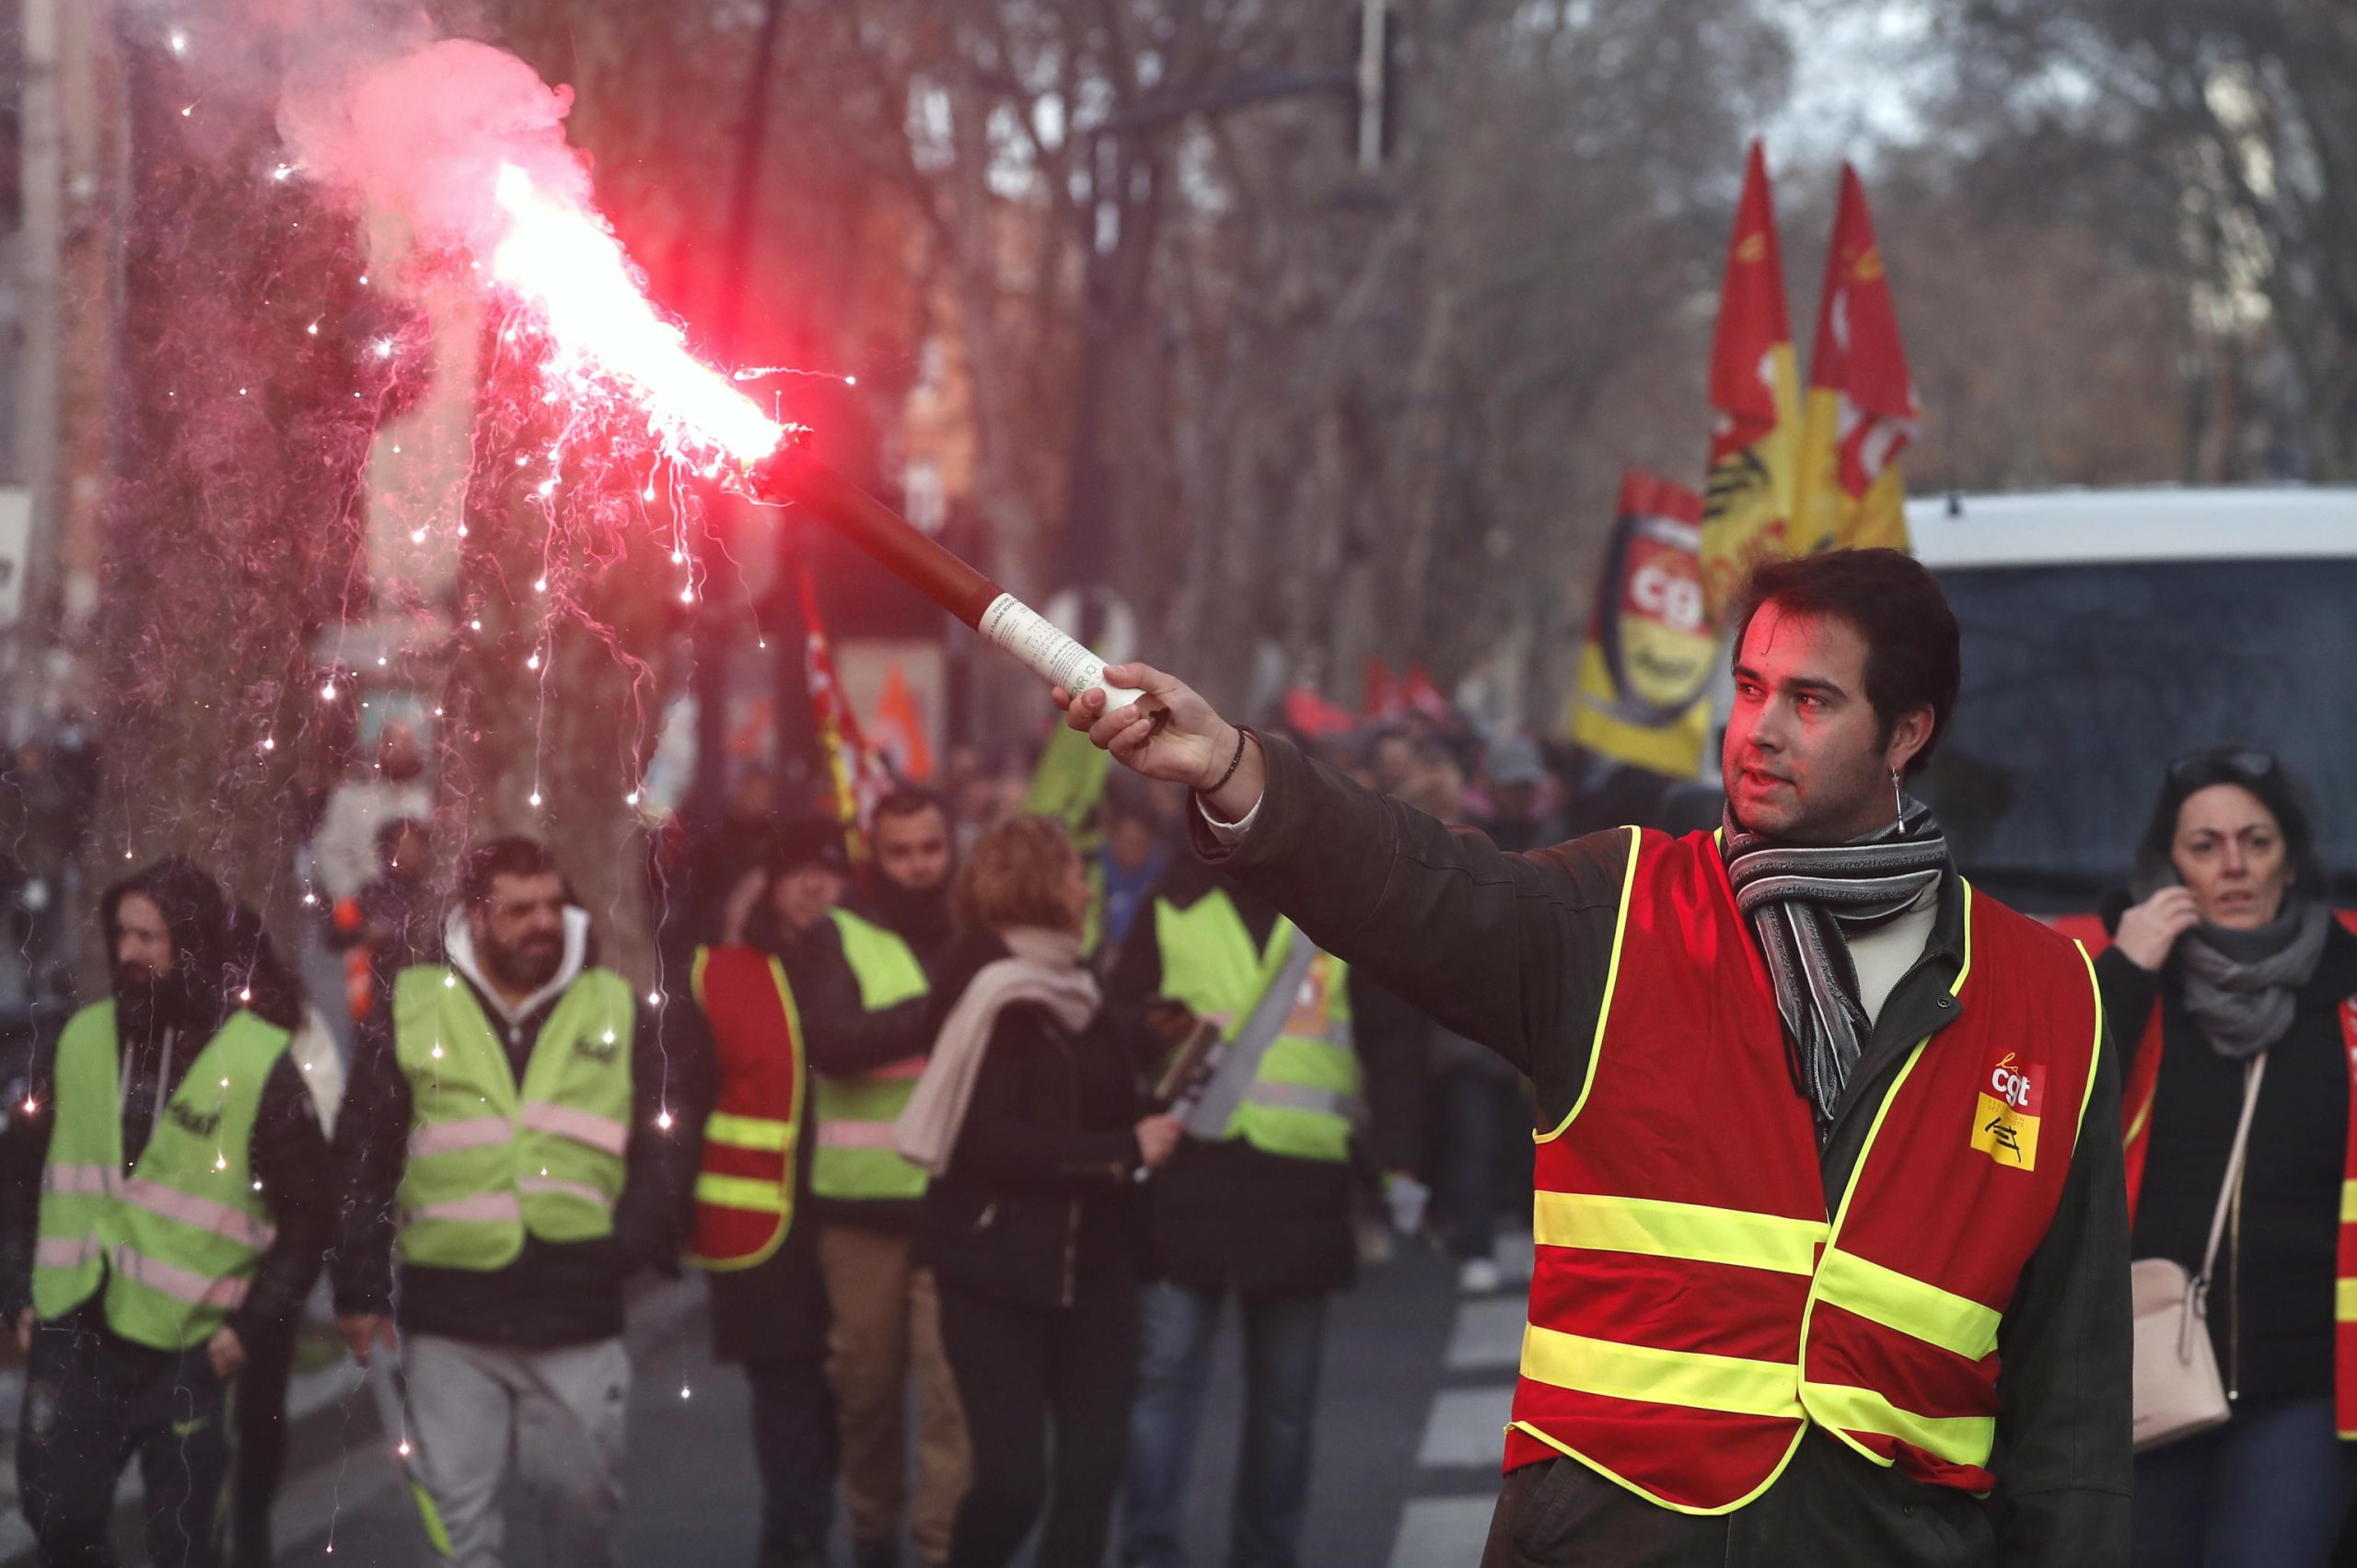 La marcia dei manifestanti guidata dai sindacati francesi